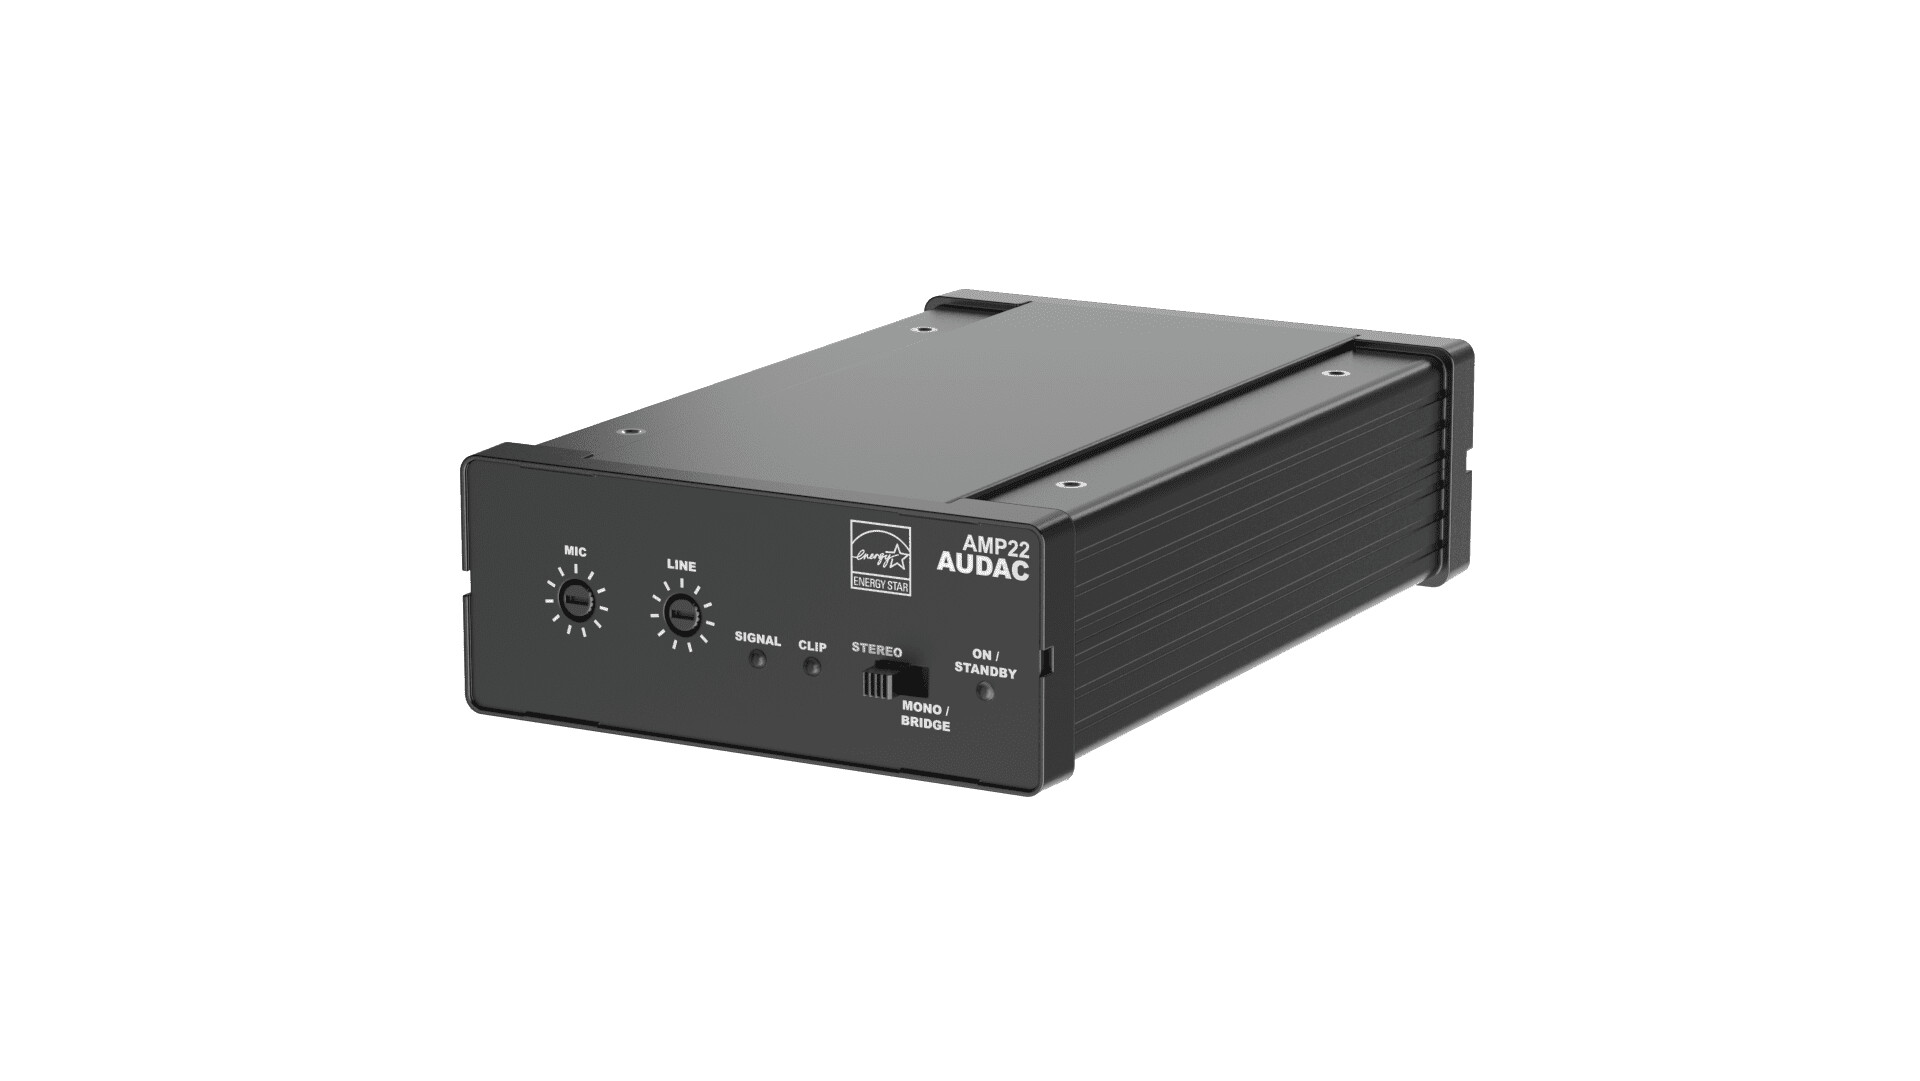 Audac-AMP22-Mini-Stereoverstarker-2x15W-4Ohm-bruckbar-sym-Mikrofon-und-Line-Eingange-WP2xx-Eingang-RJ45-S-Box